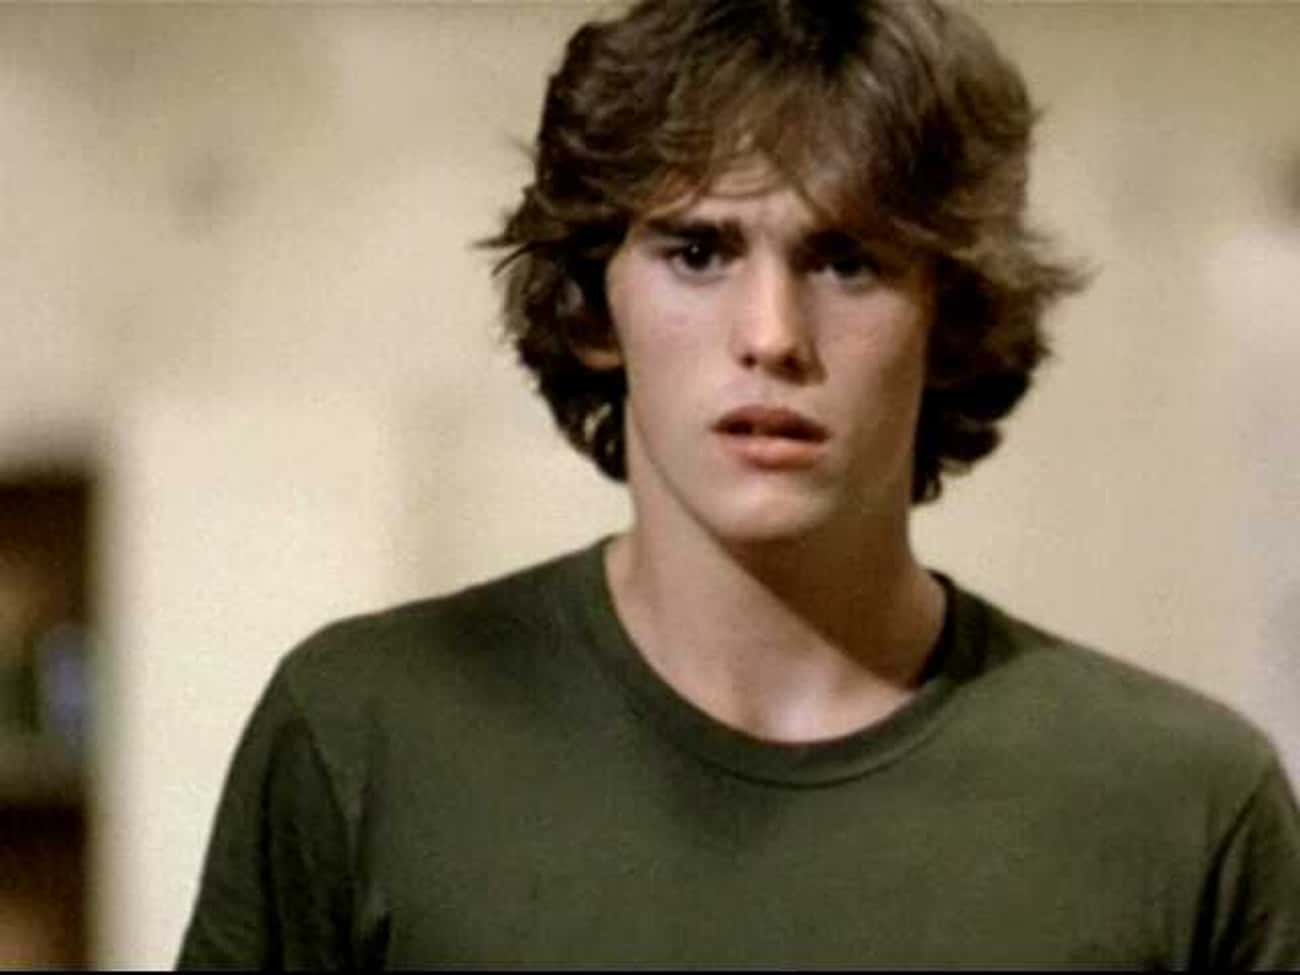 Young Matt Dillon in Army Green T-Shirt